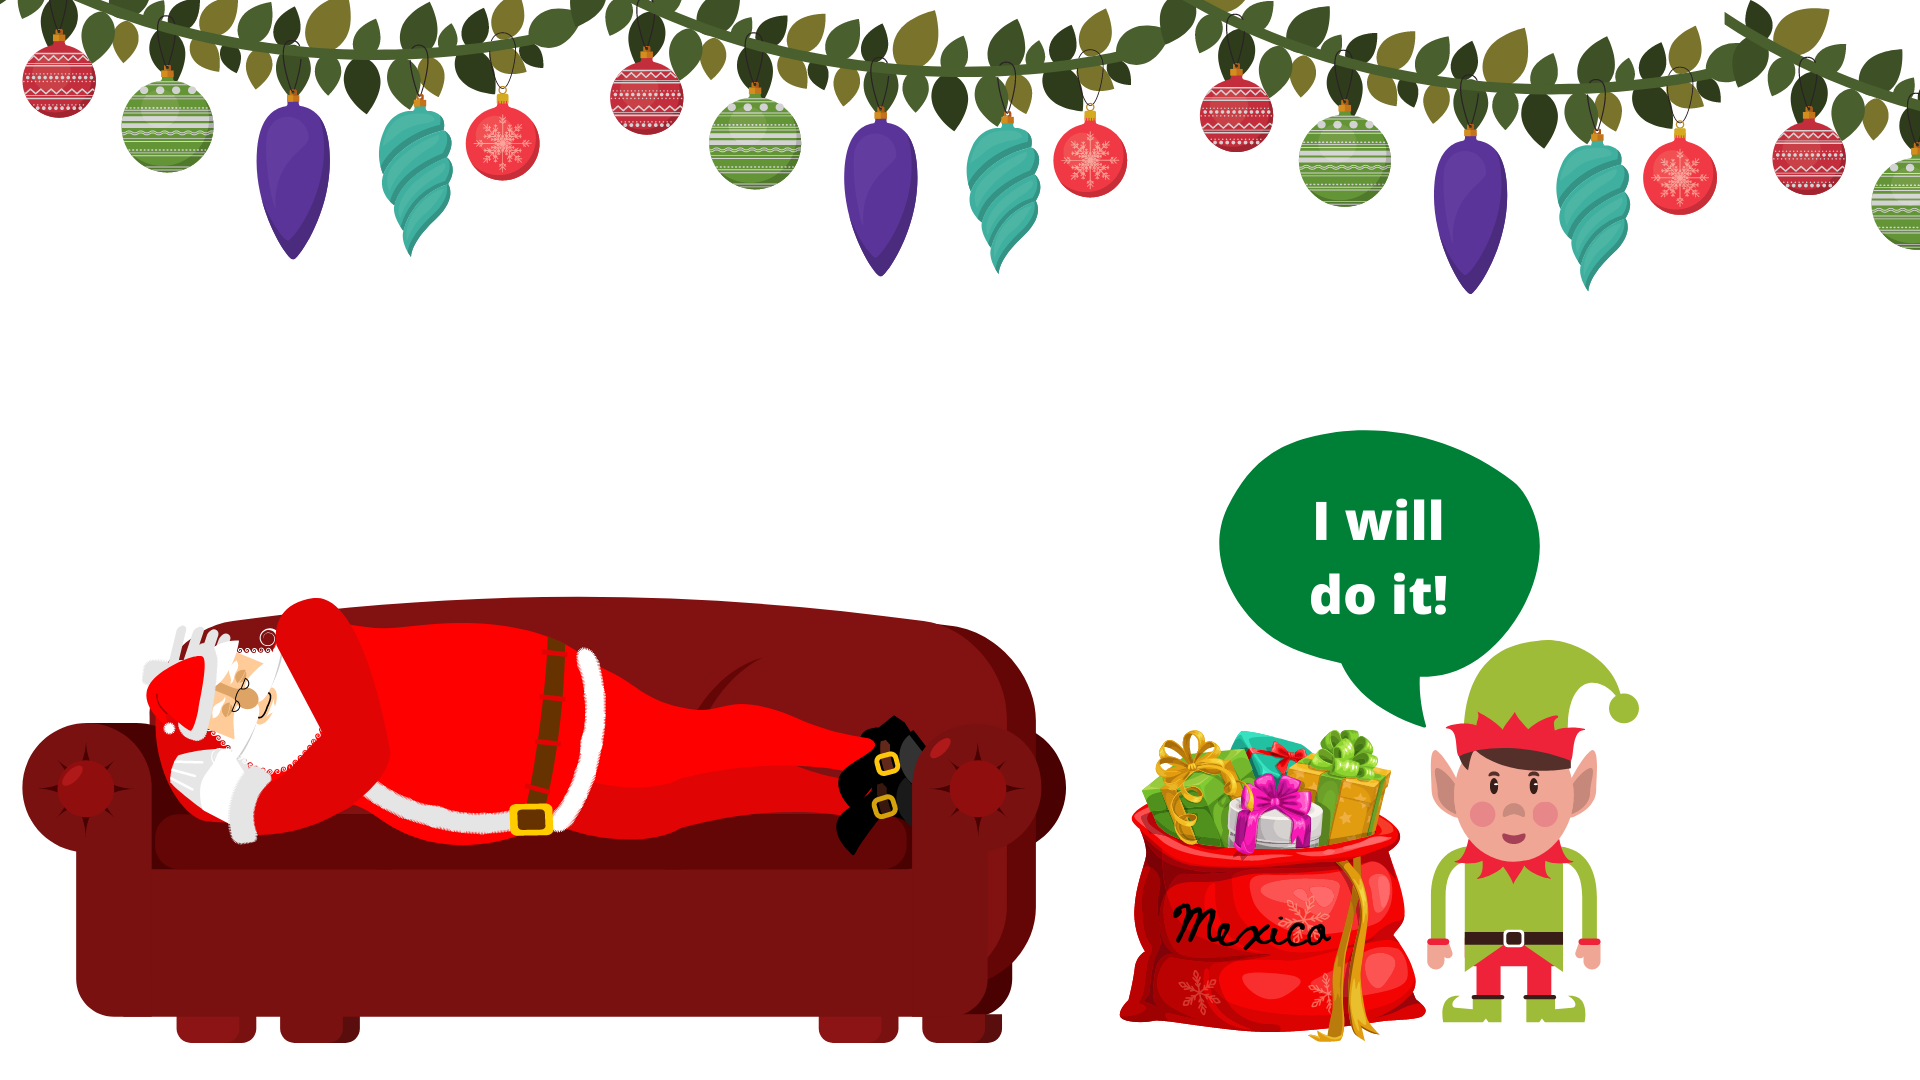 Santa sleeping with elf saying, "I will do it!"